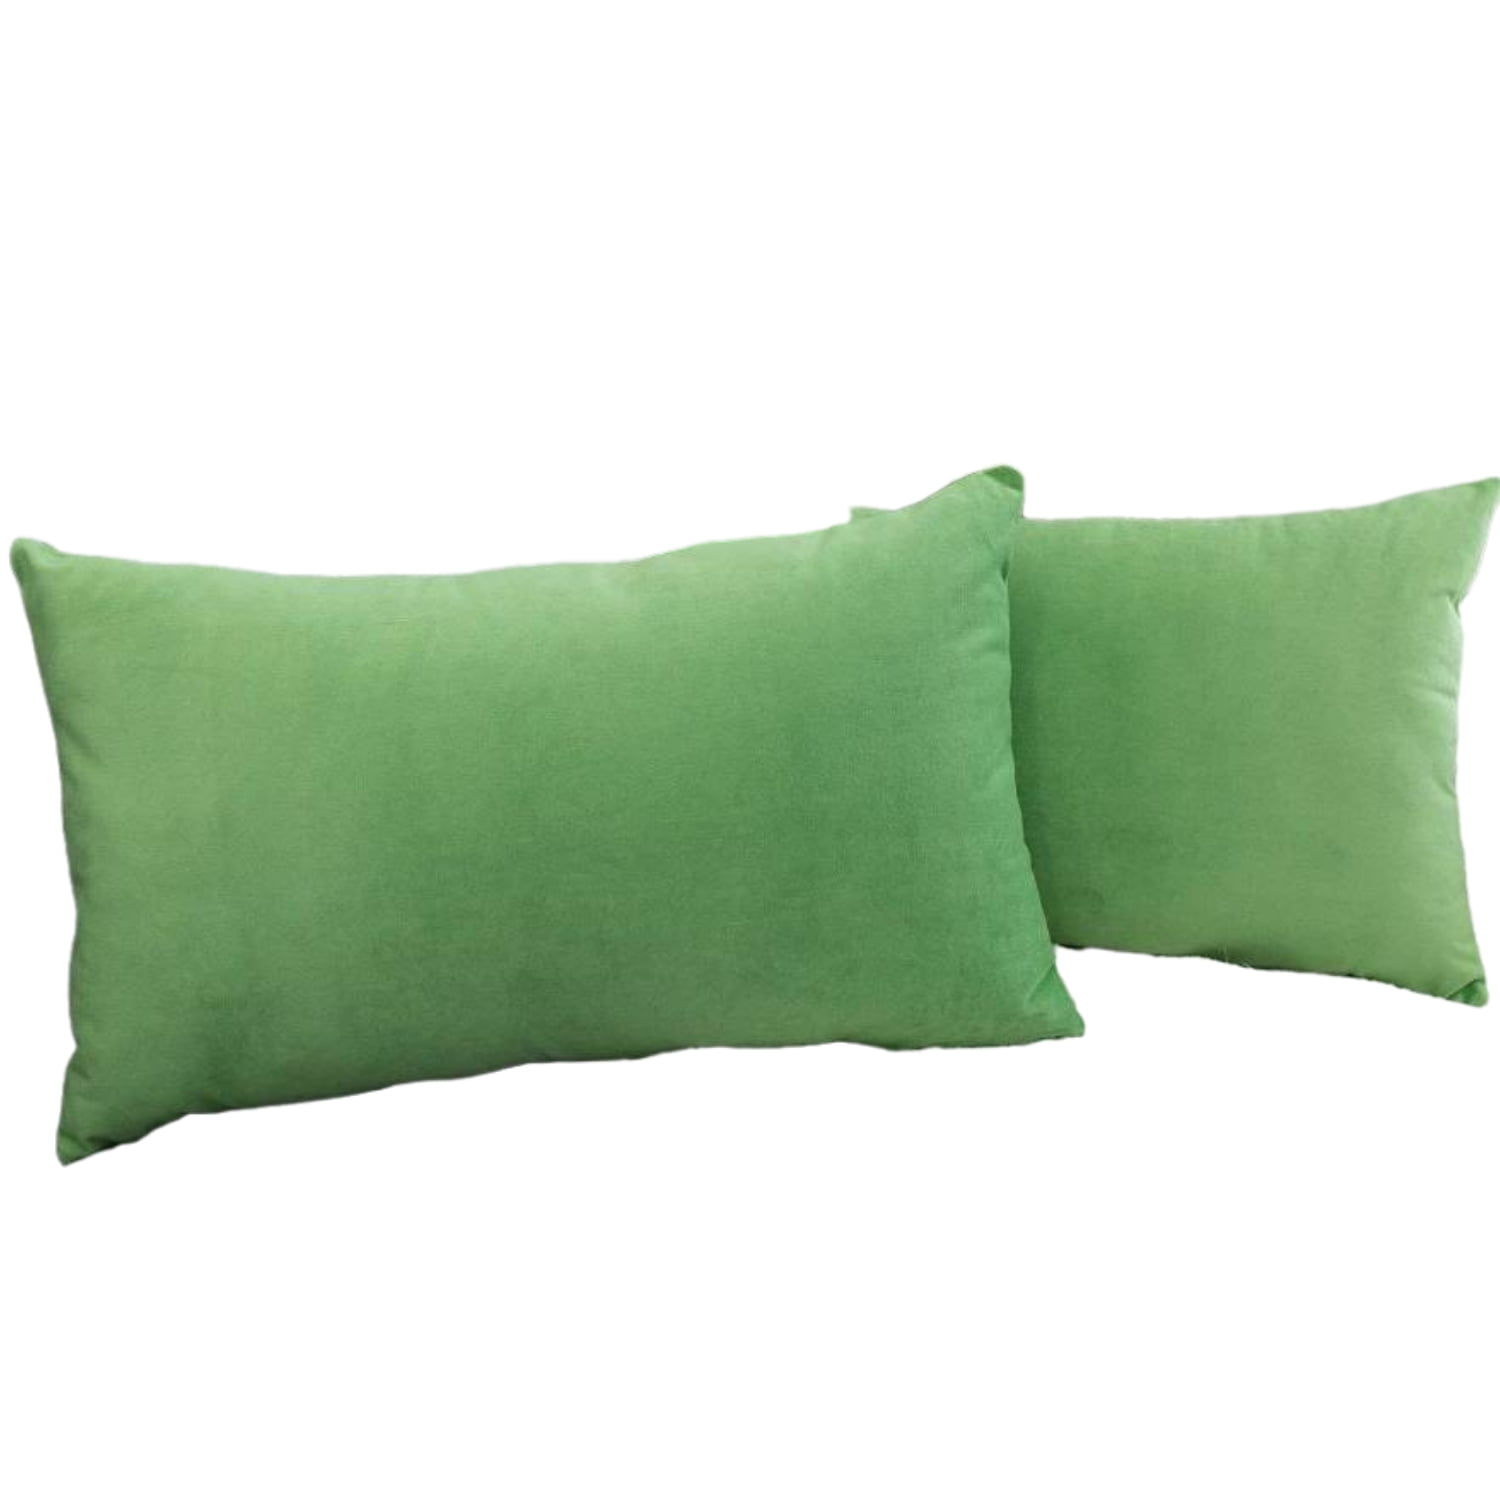 Luxury Sofa Cushion Covers,2 Sizes 17"x 17" And 16" x 23" Large Boudoir Cushions